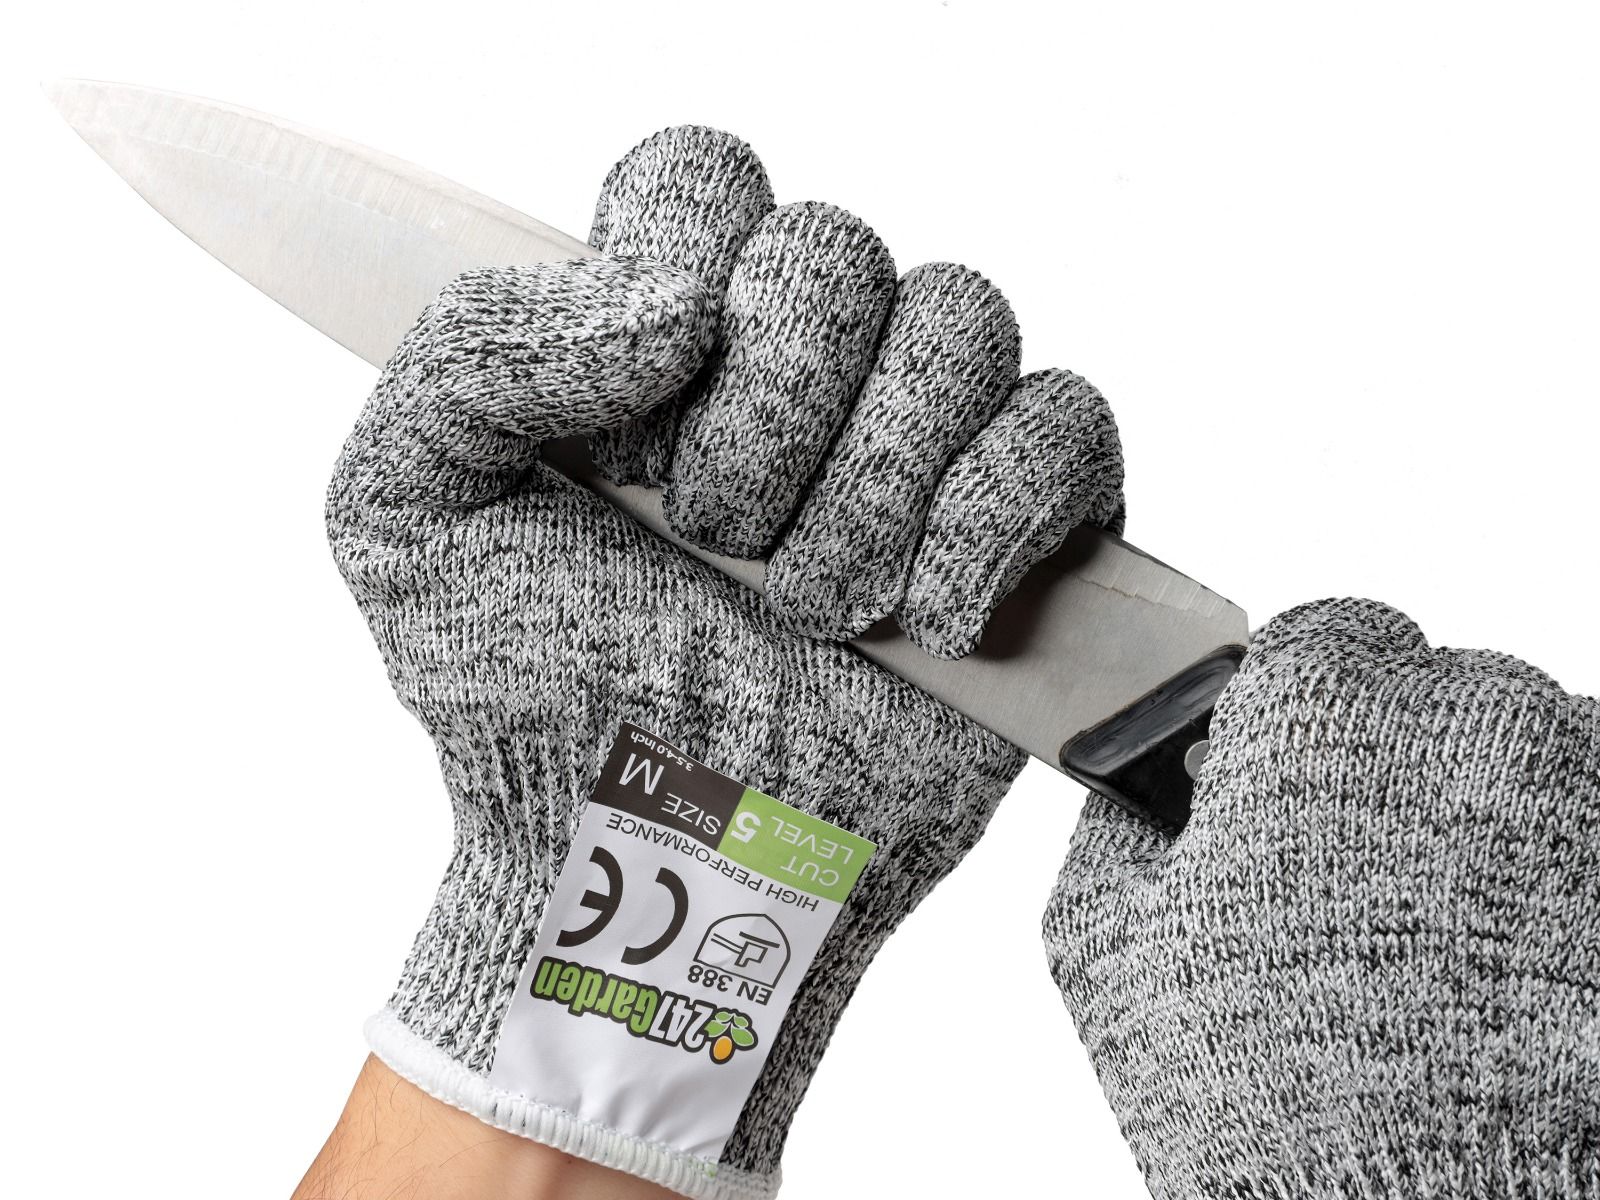 Cut Resistant Gloves Anti knife Cut HPPE Level 5 EN388 Safety Work